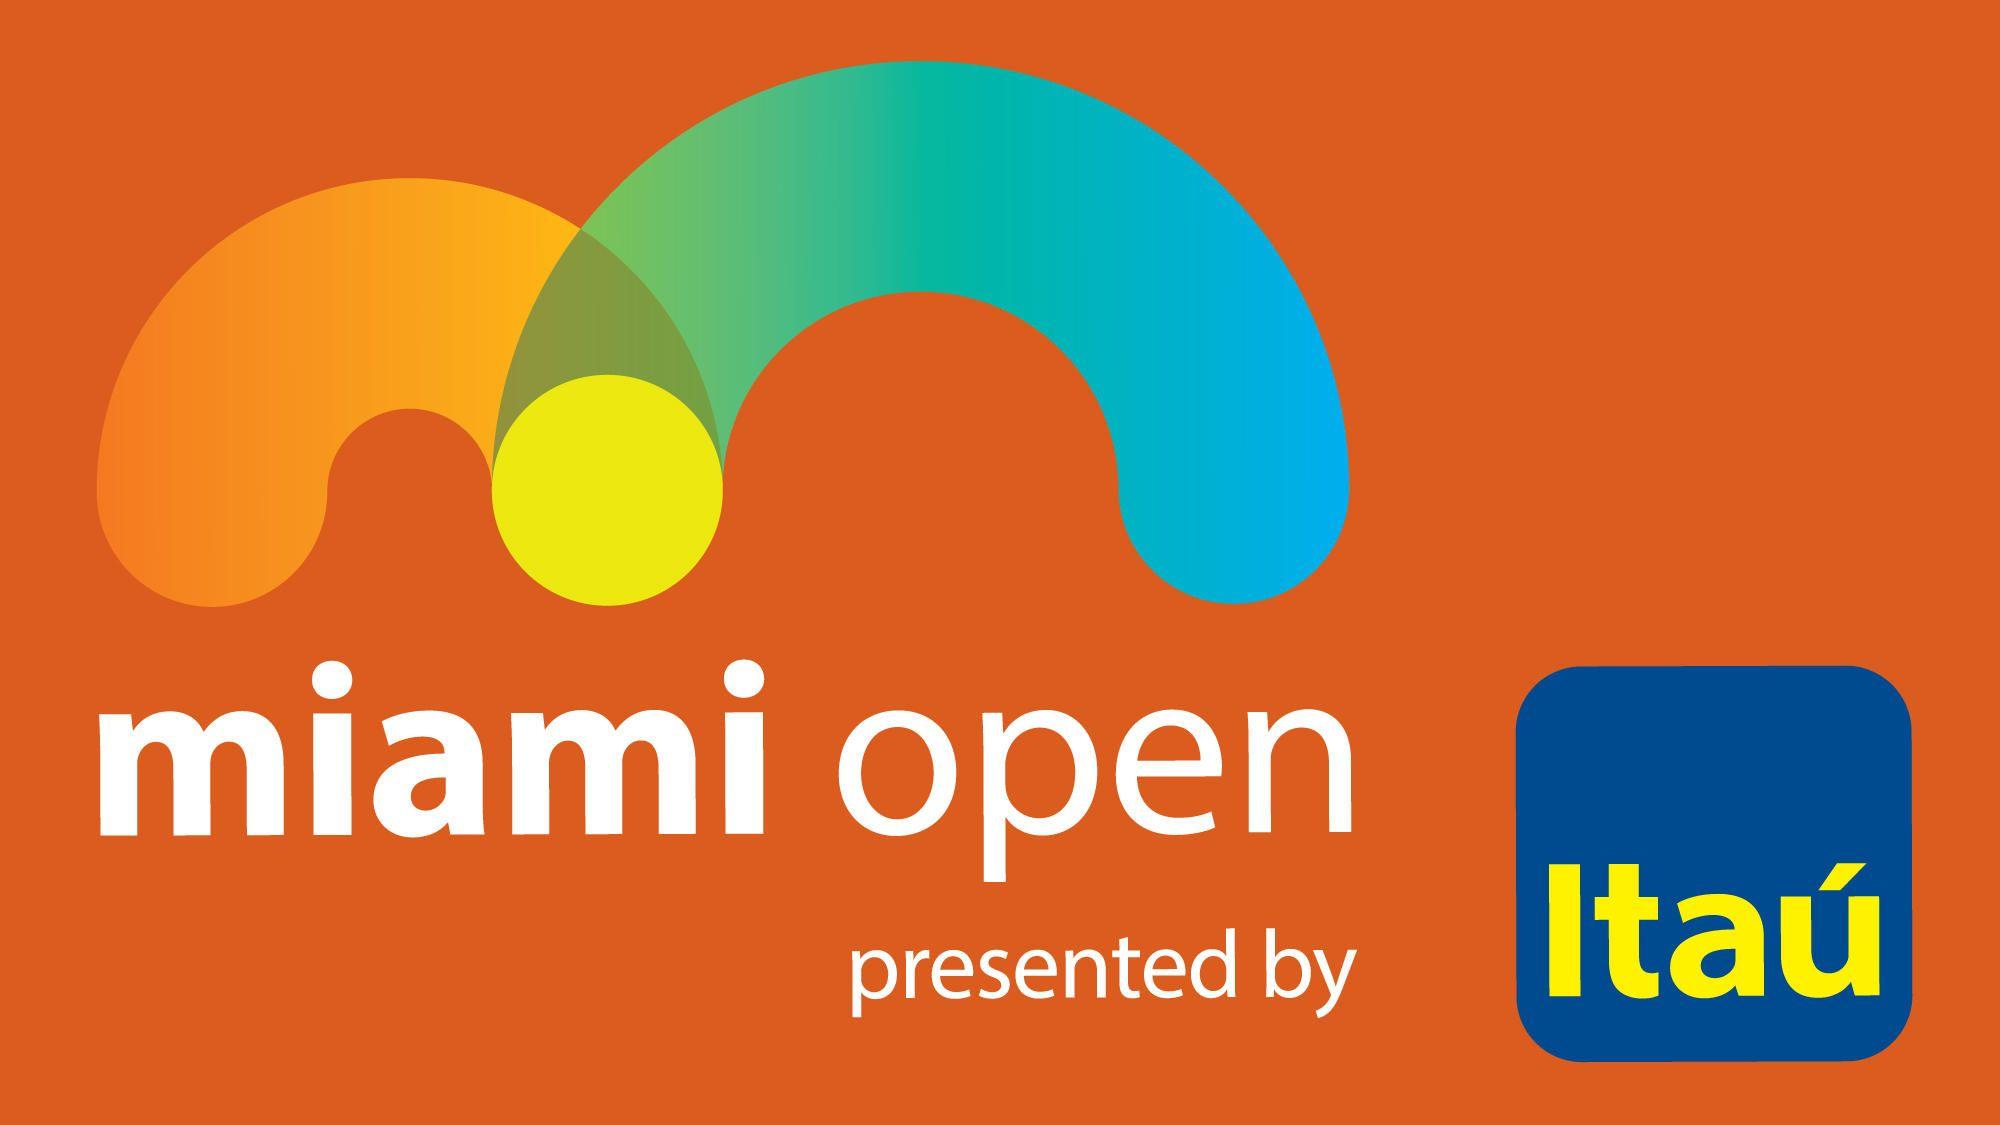 Itau Logo - It's The Miami Open Now. Obrigado, Itaú